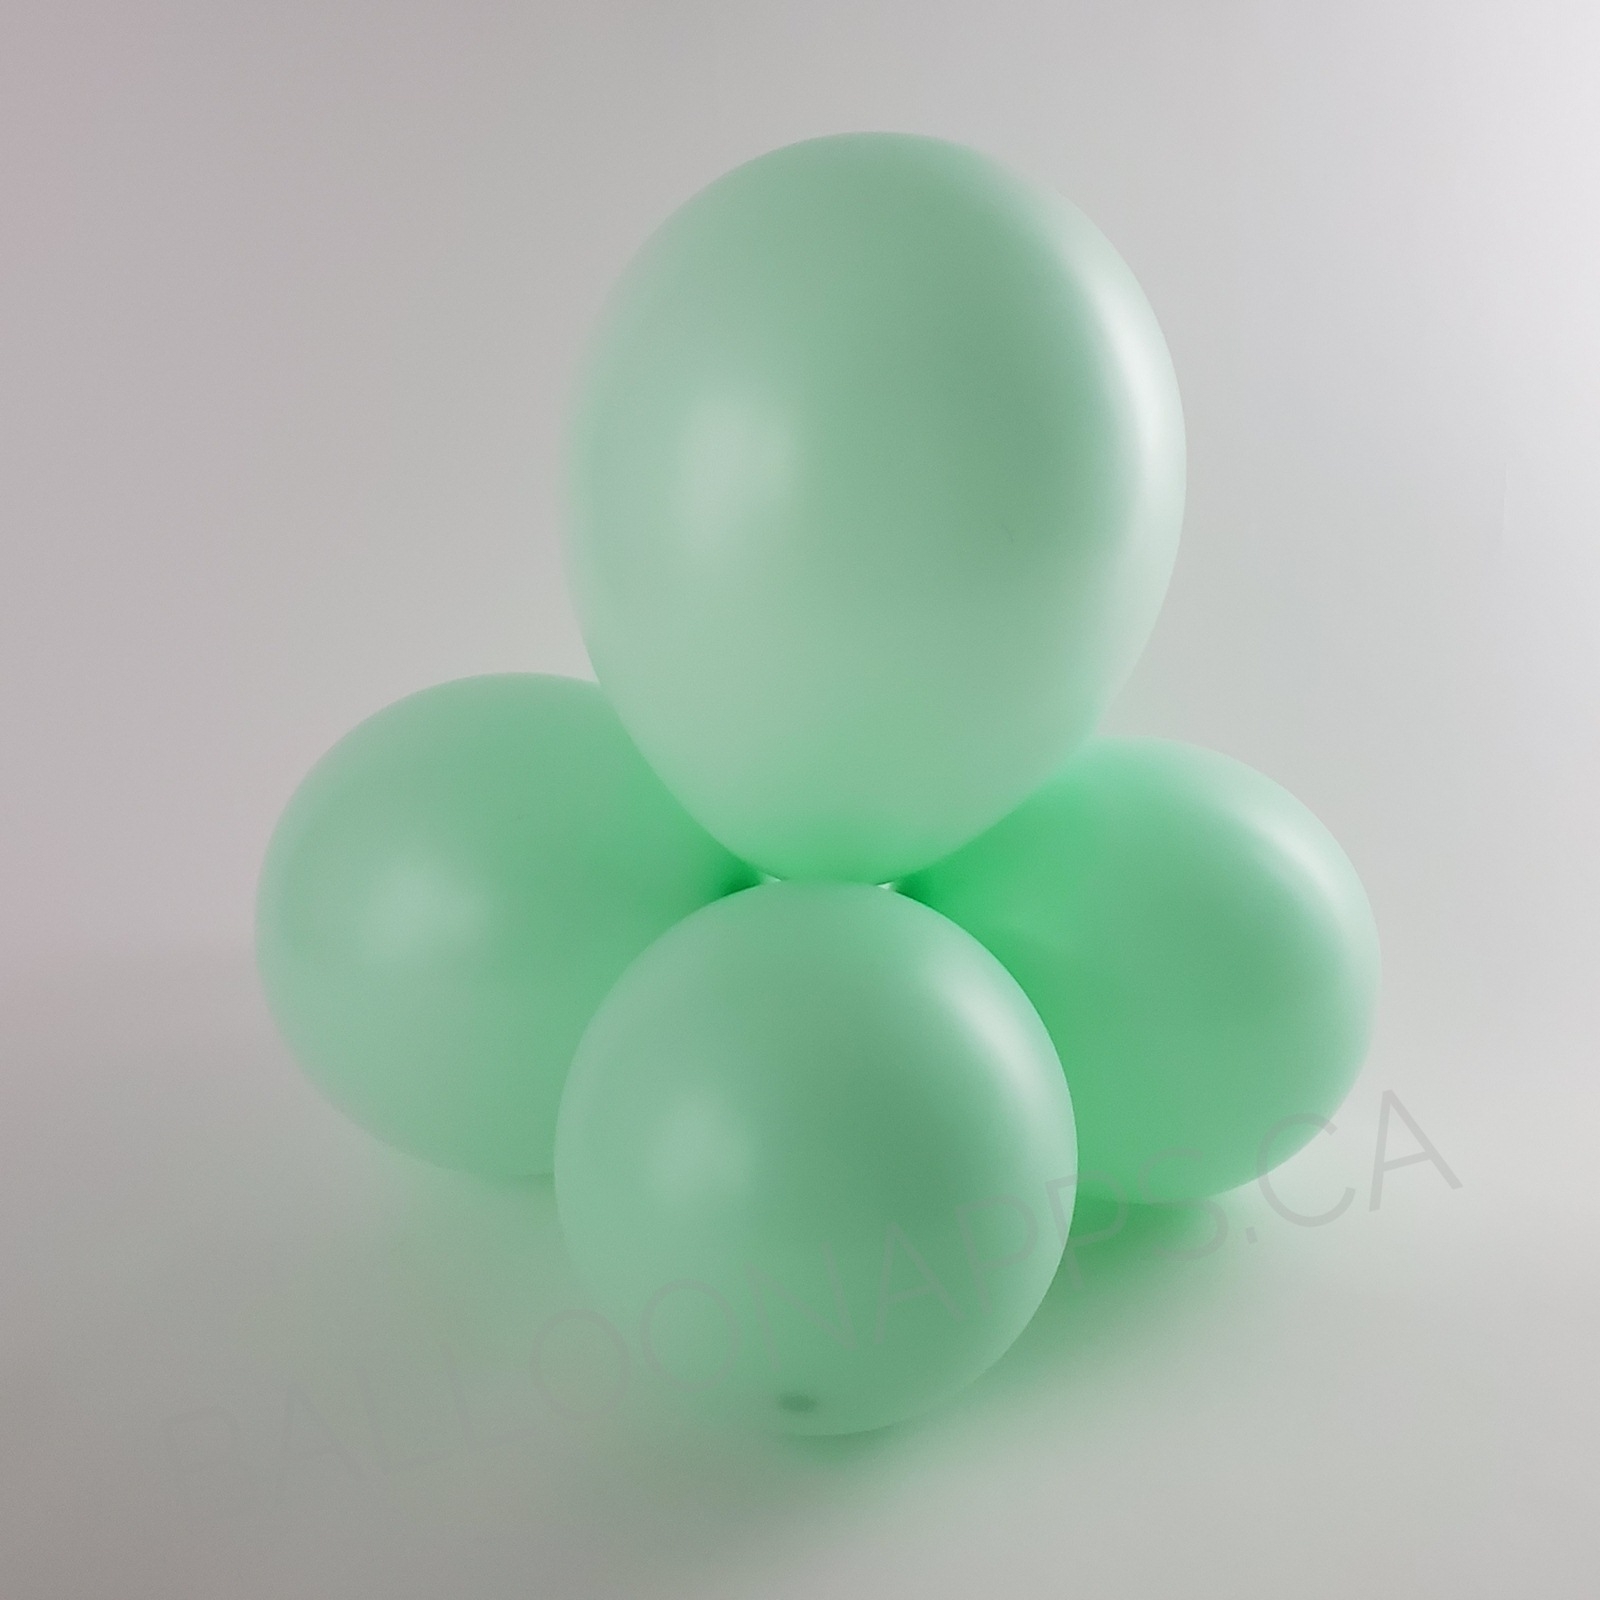 balloon texture Sempertex (1) 36